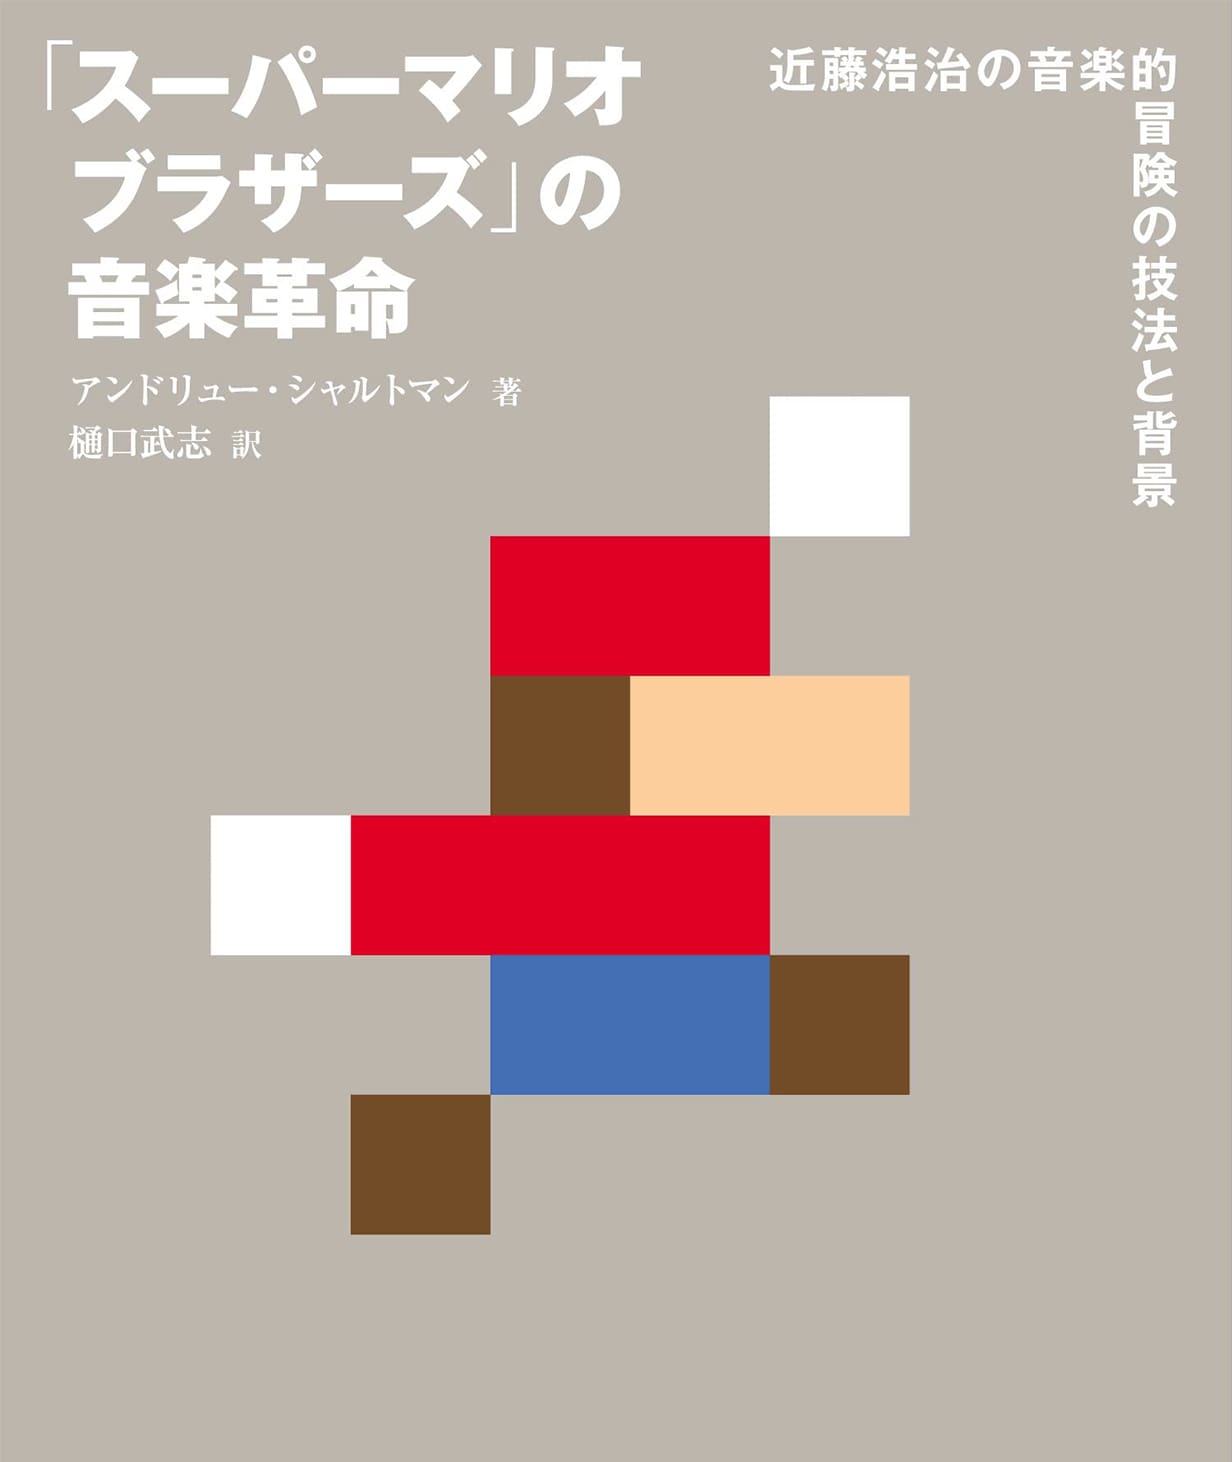 Koji Kondo’s Super Mario Bros. Soundtrack Cover